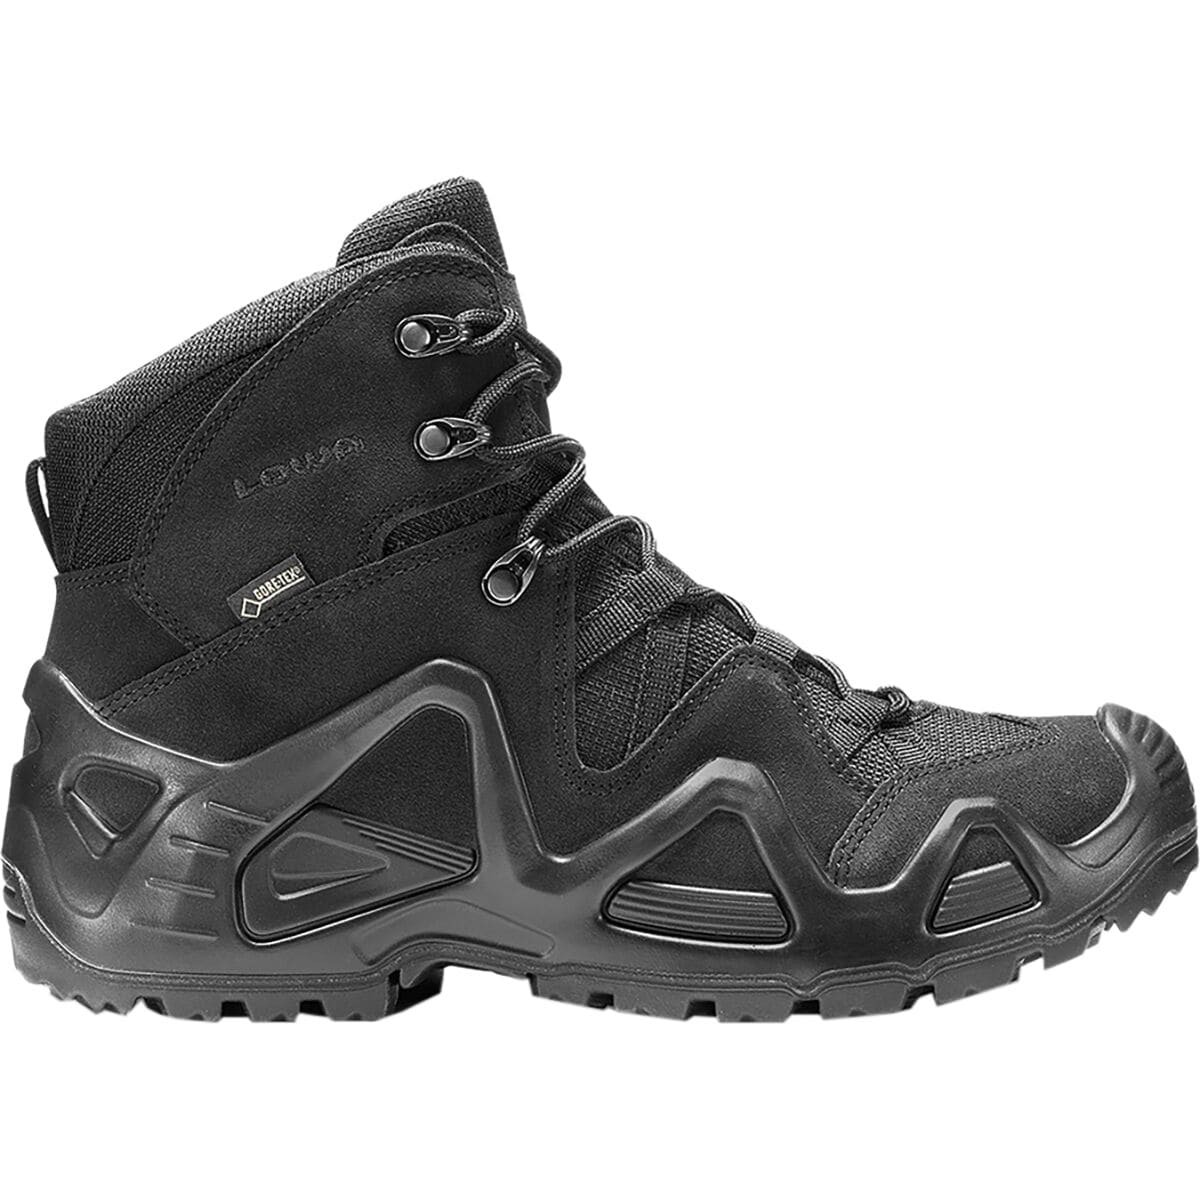 Zephyr GTX Mid TF Hiking Boot - Men